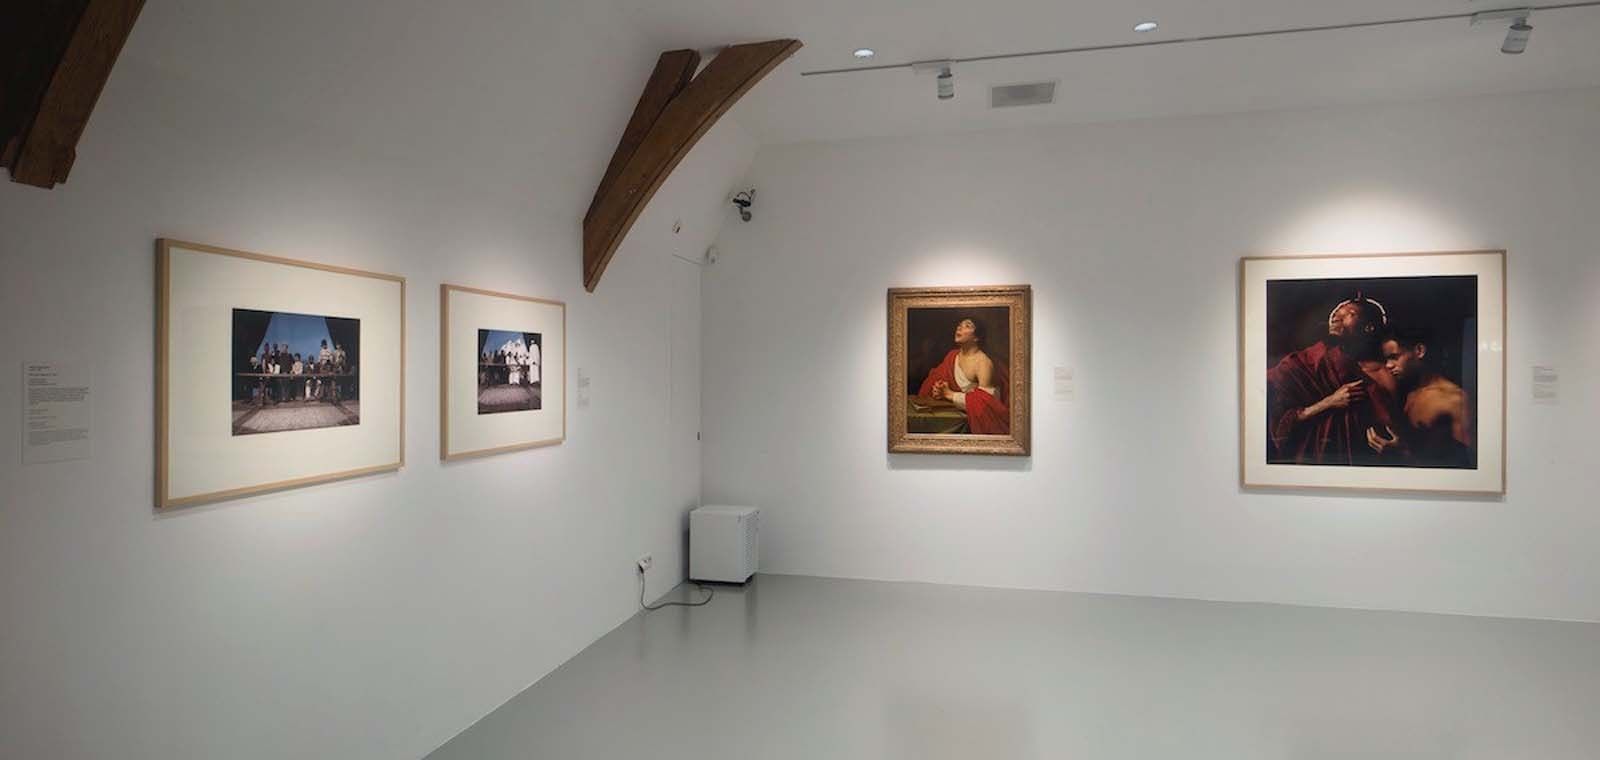 Left: Faisal Abdu’Allah, ‘The Last Supper 1&2’, 2003. Centre: Jan van Bijlert, ‘Johannes de Evangelist’, 1625-1630. Right: Rotimi Fani-Kayode, ‘Every Moment Counts’ (Ecstatic Antibodie, 1989